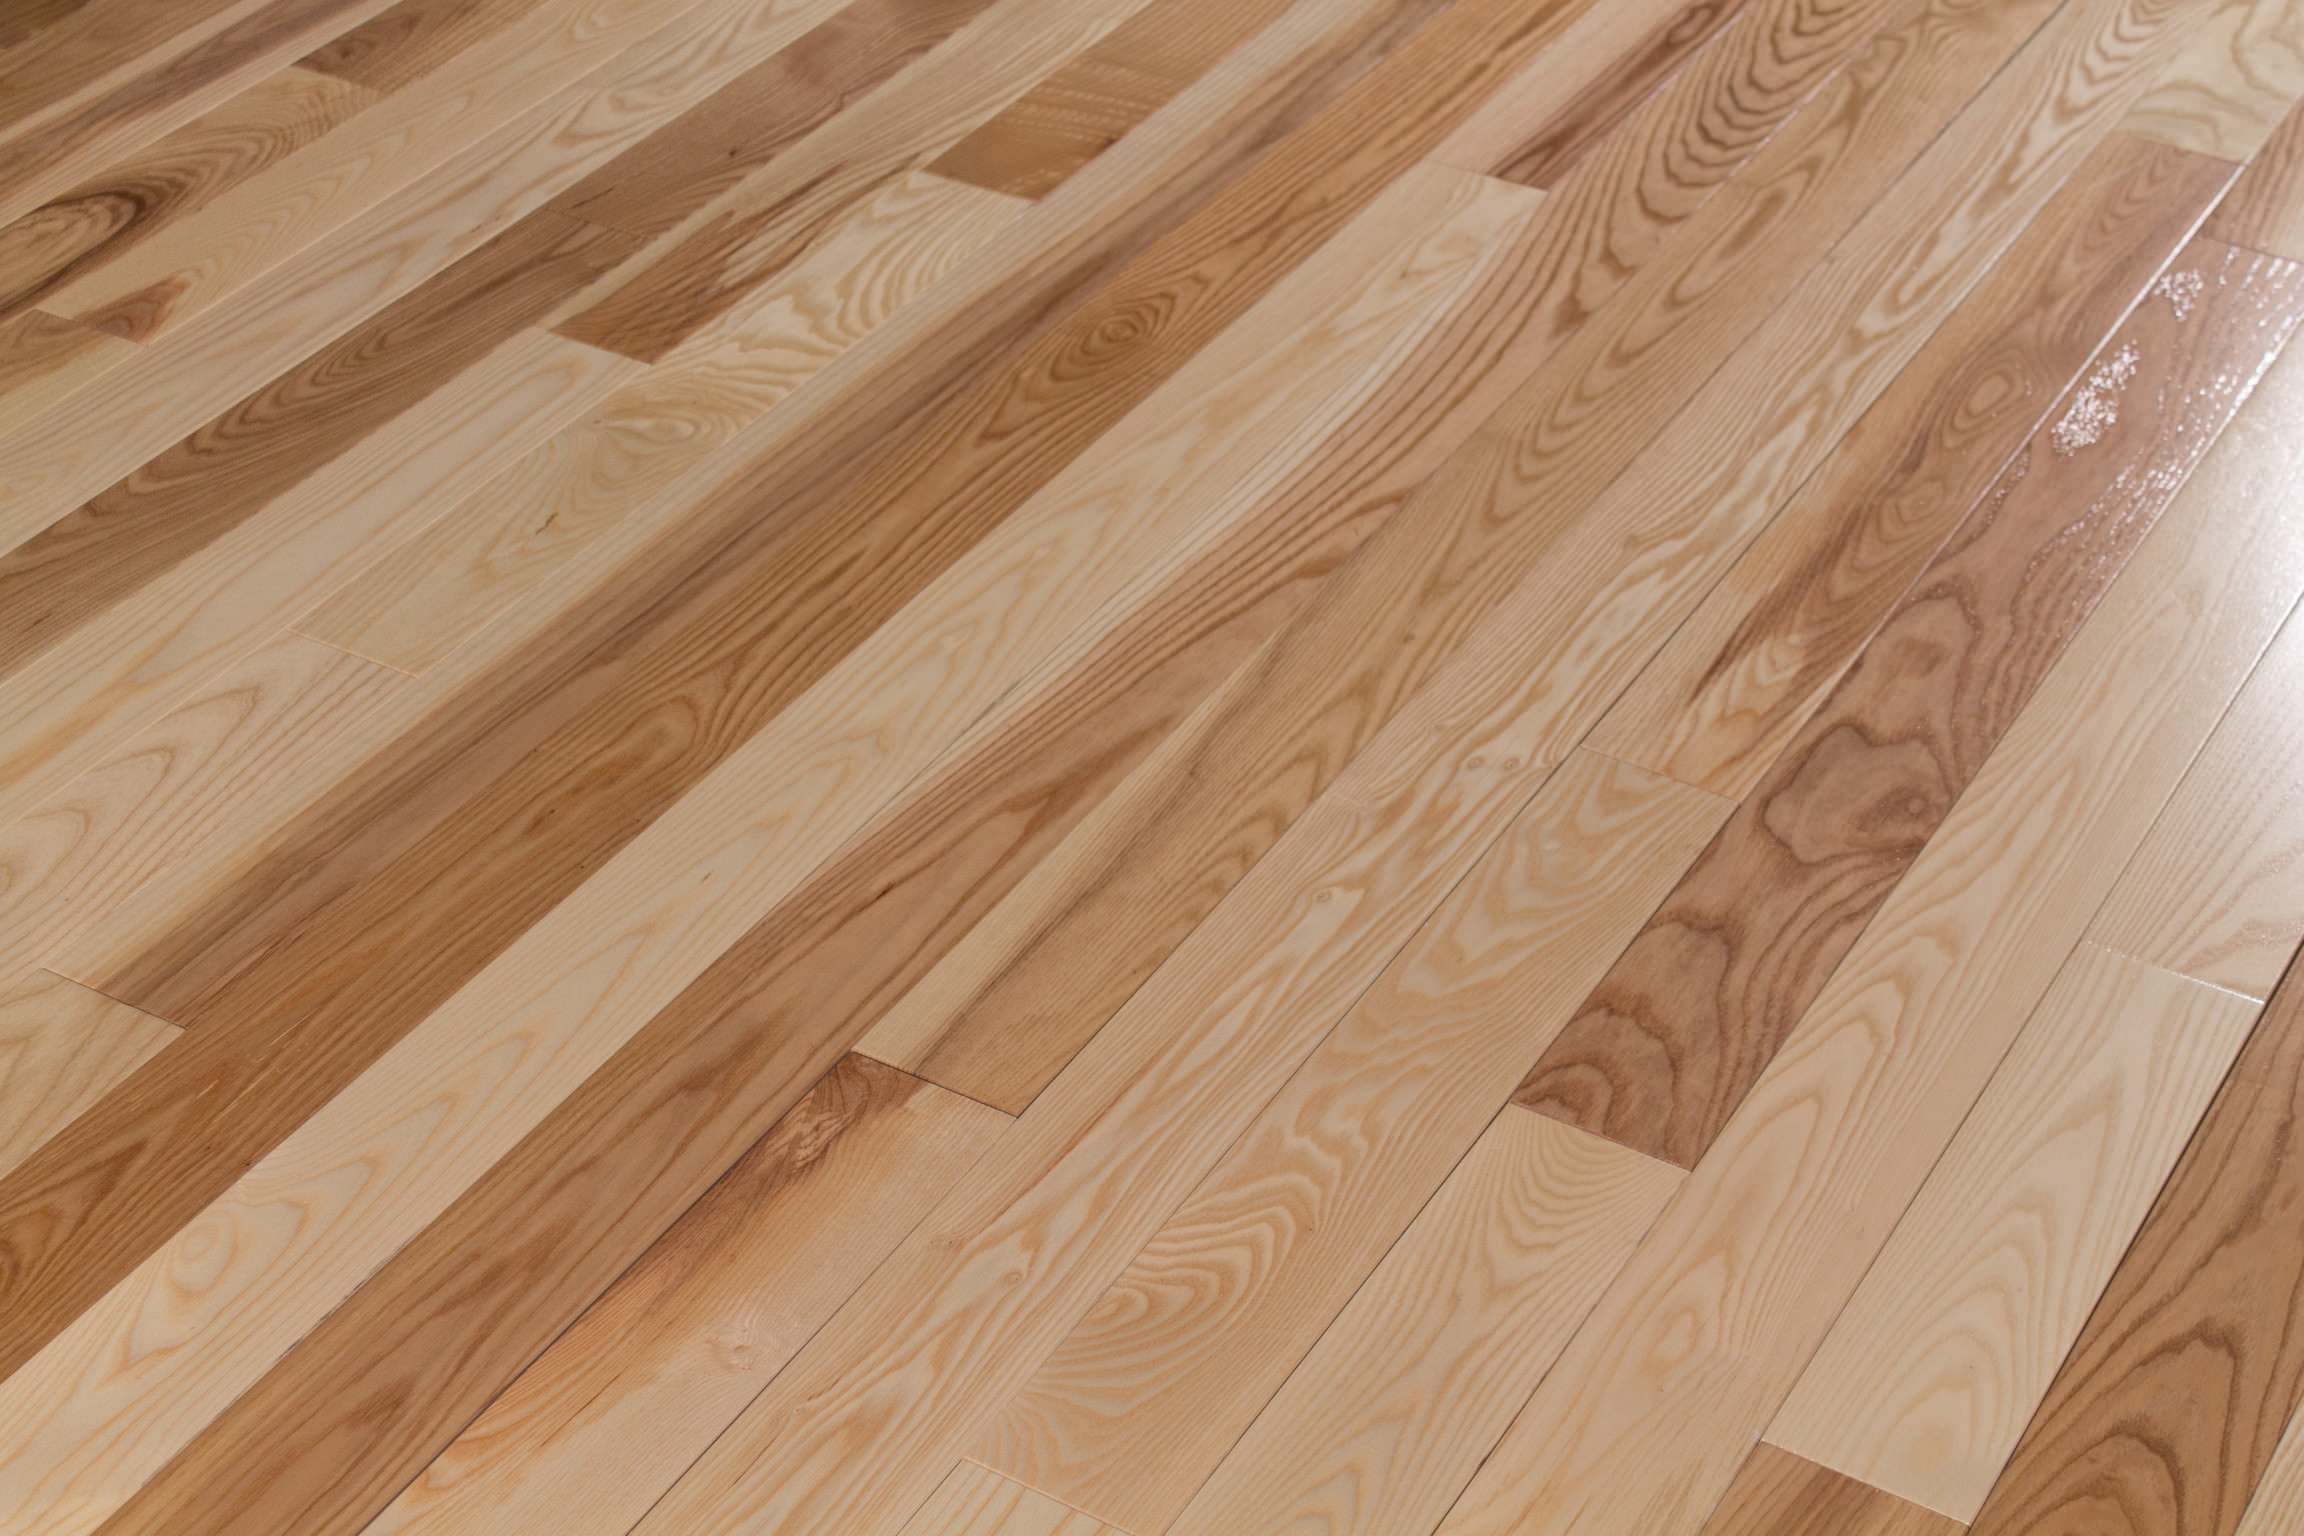 Domestic Hardwood Flooring Guide, Is Ash Good For Flooring